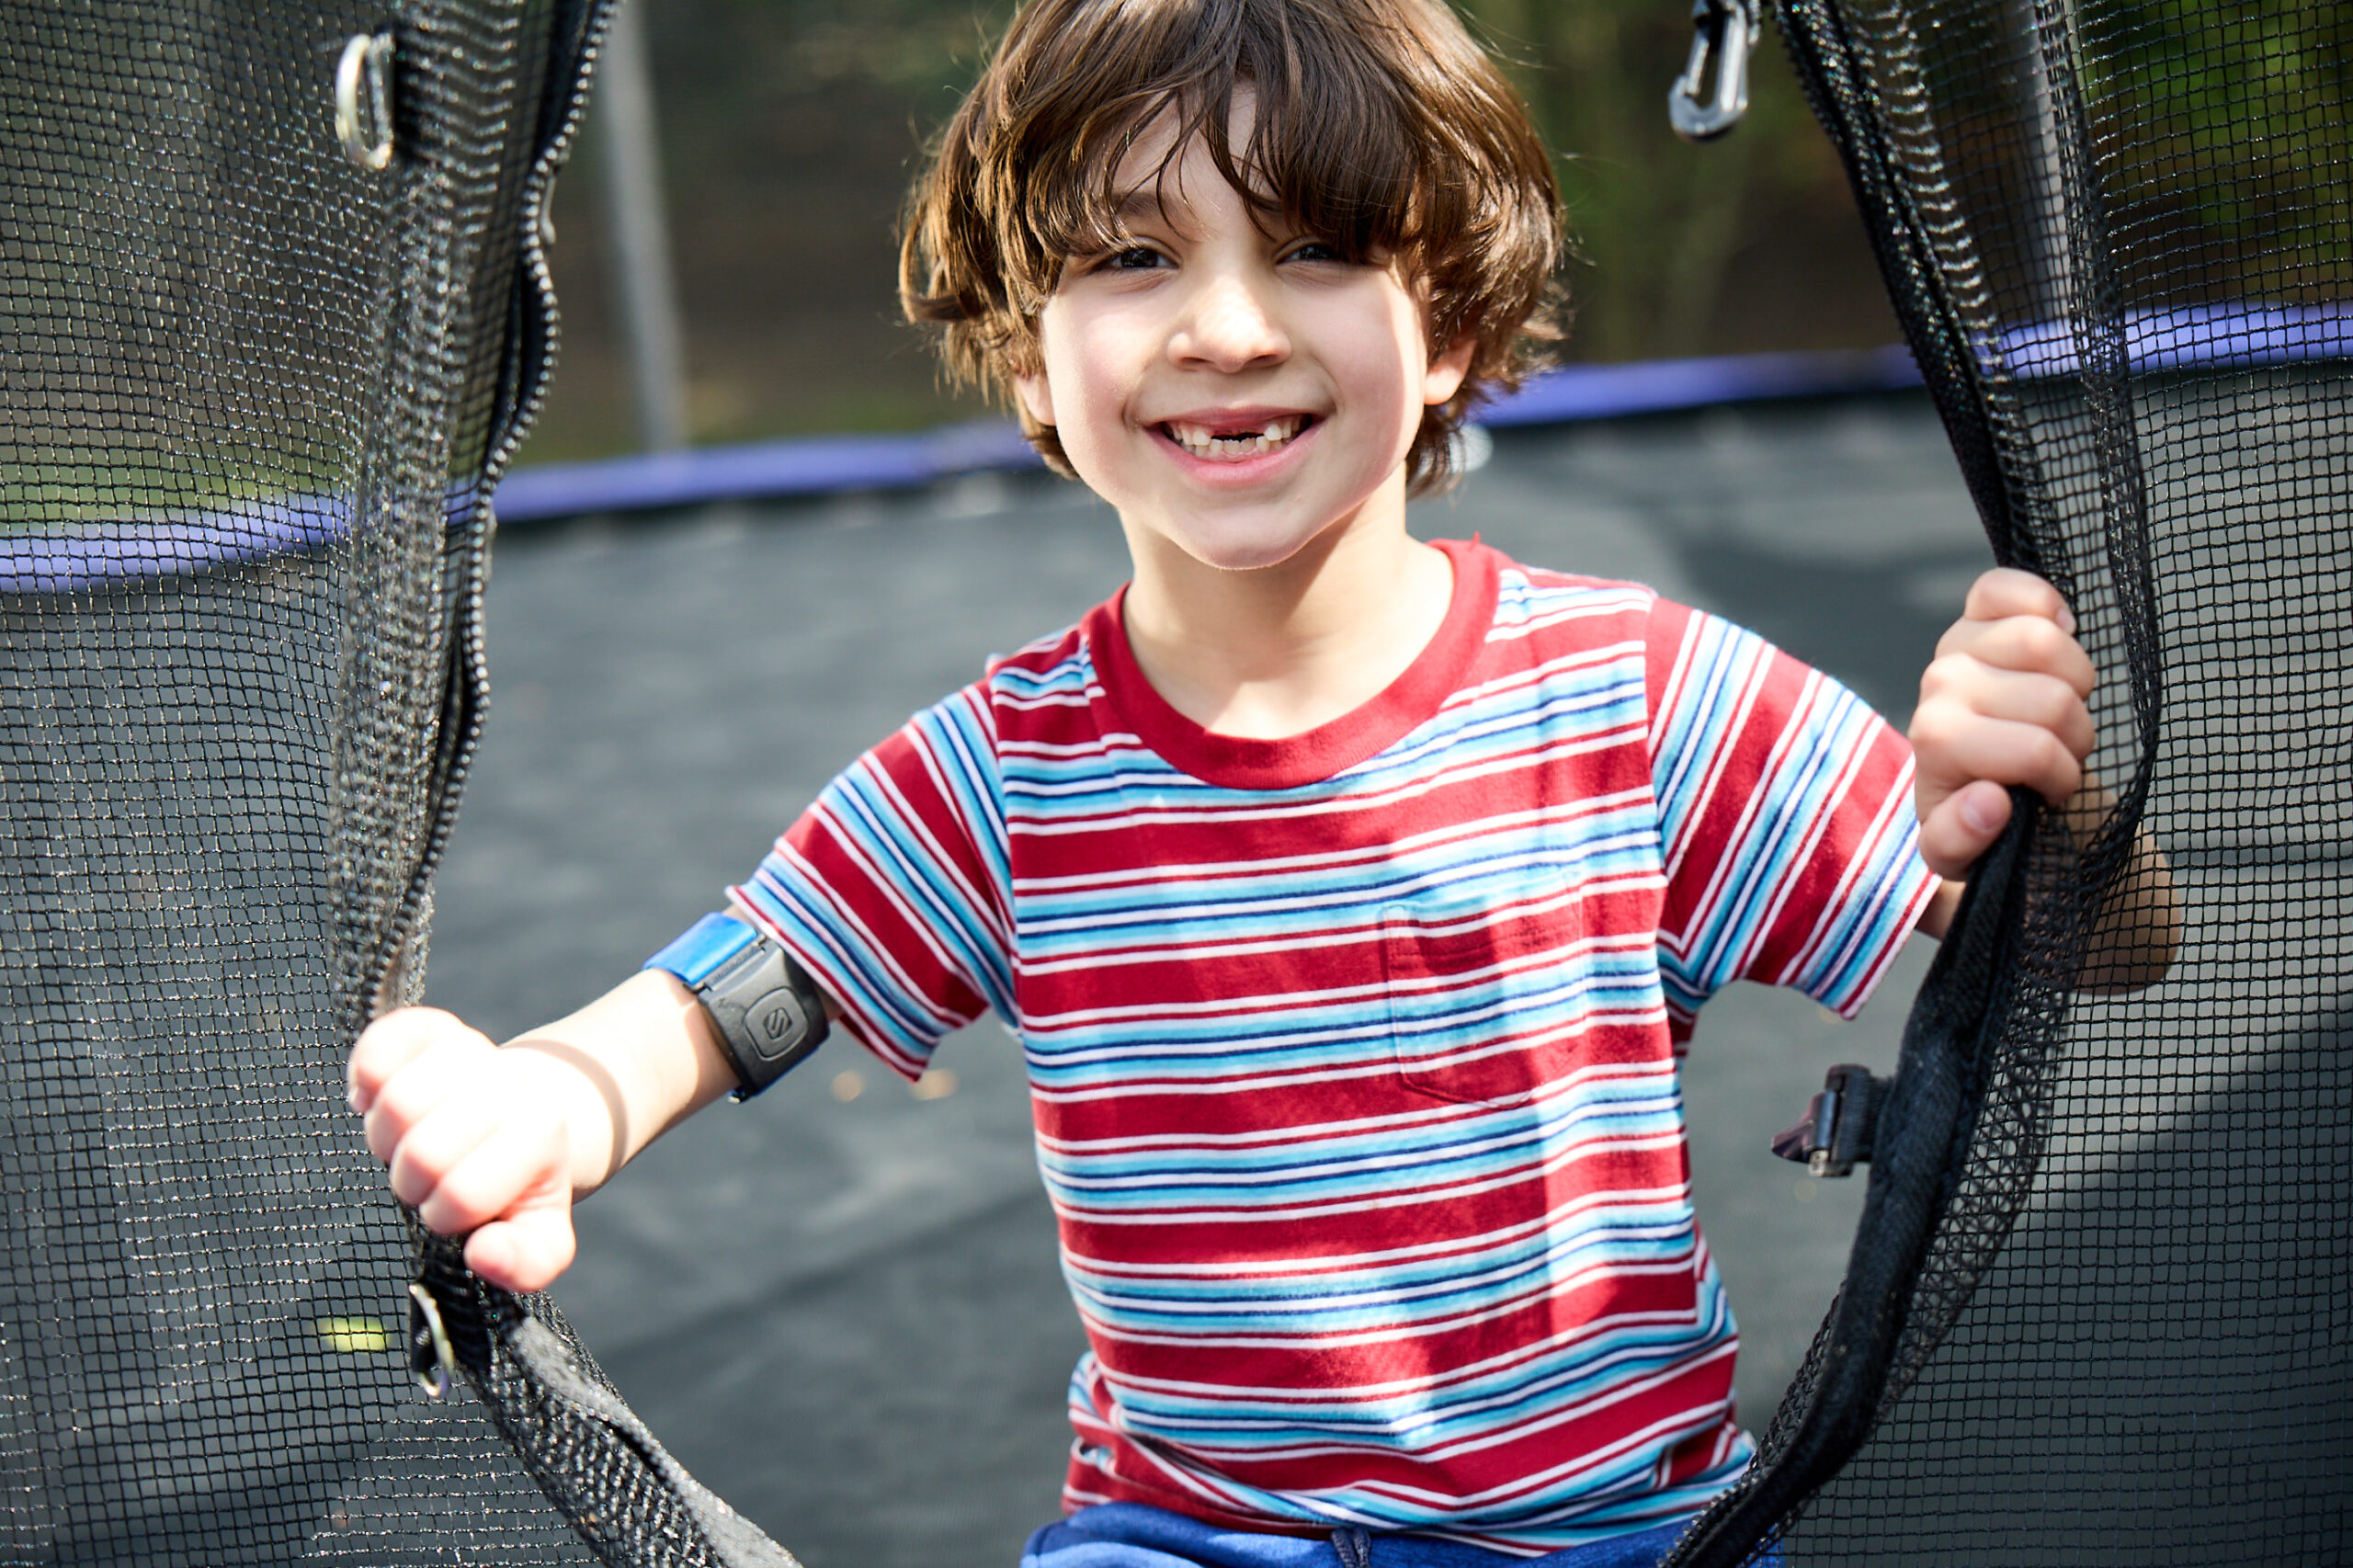 boy smiling on trampoline